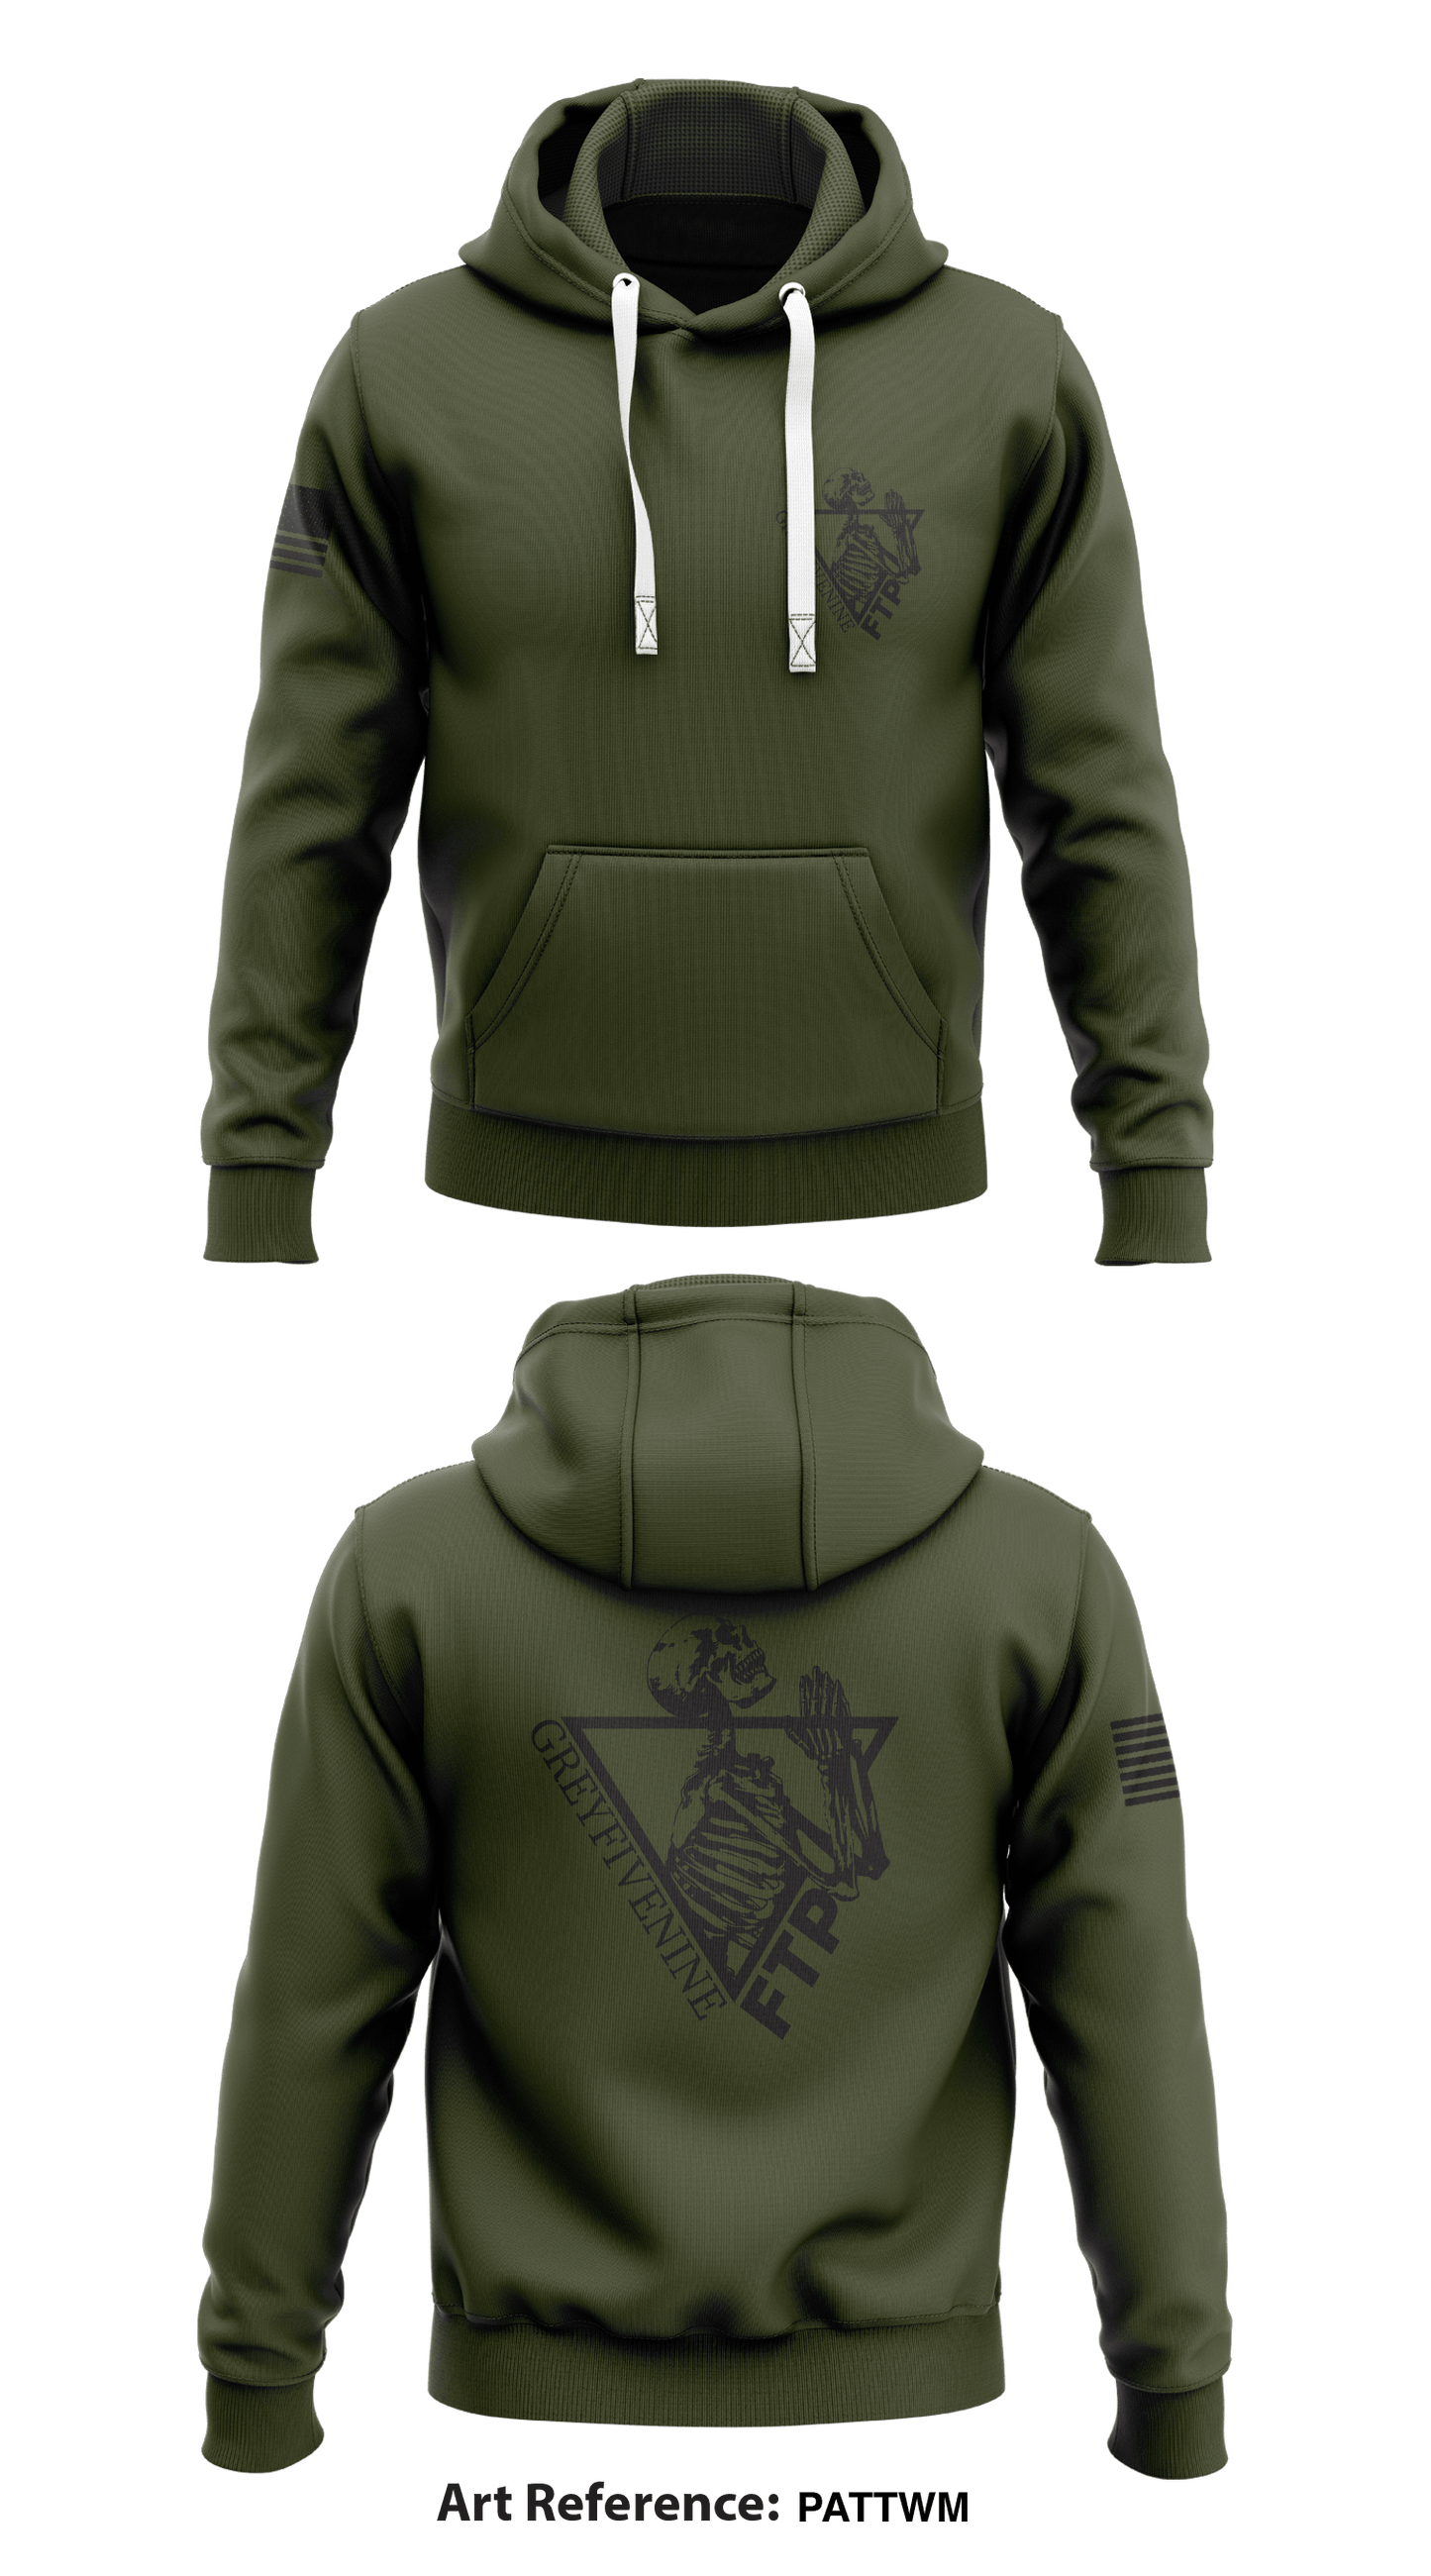 Alpha Store 2 Core – - Emblem Hooded Performance Athletic pAttwm Sweatshirt Men\'s